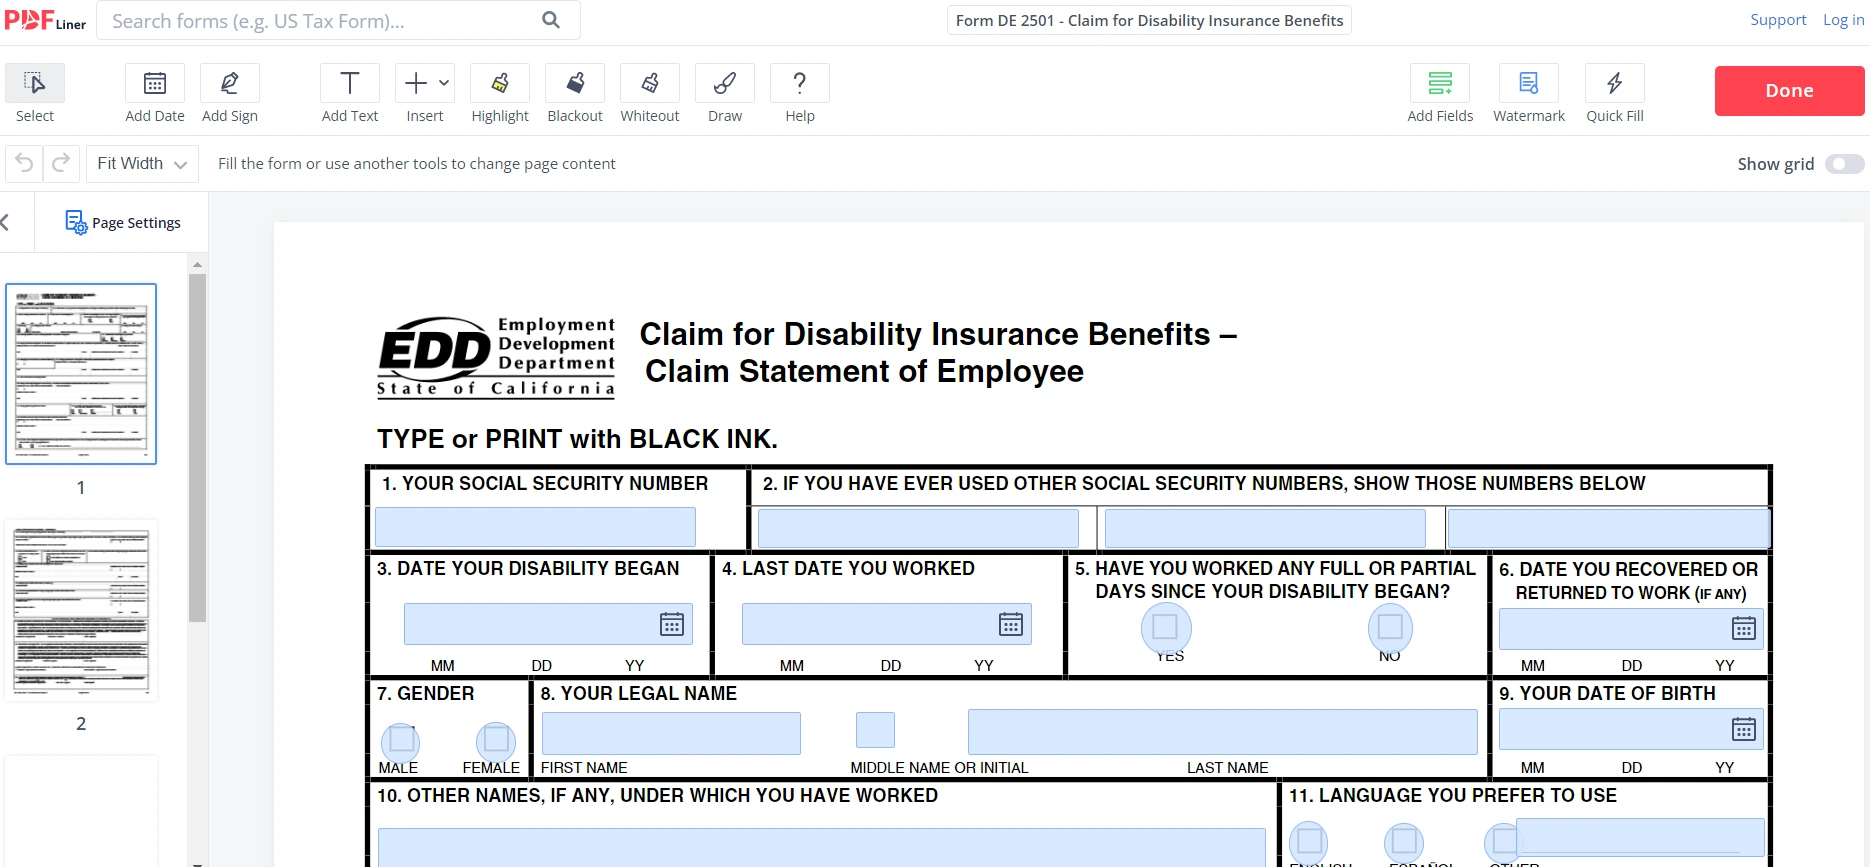 Form DE 2501 - Claim for Disability Insurance Benefits on PDFLiner